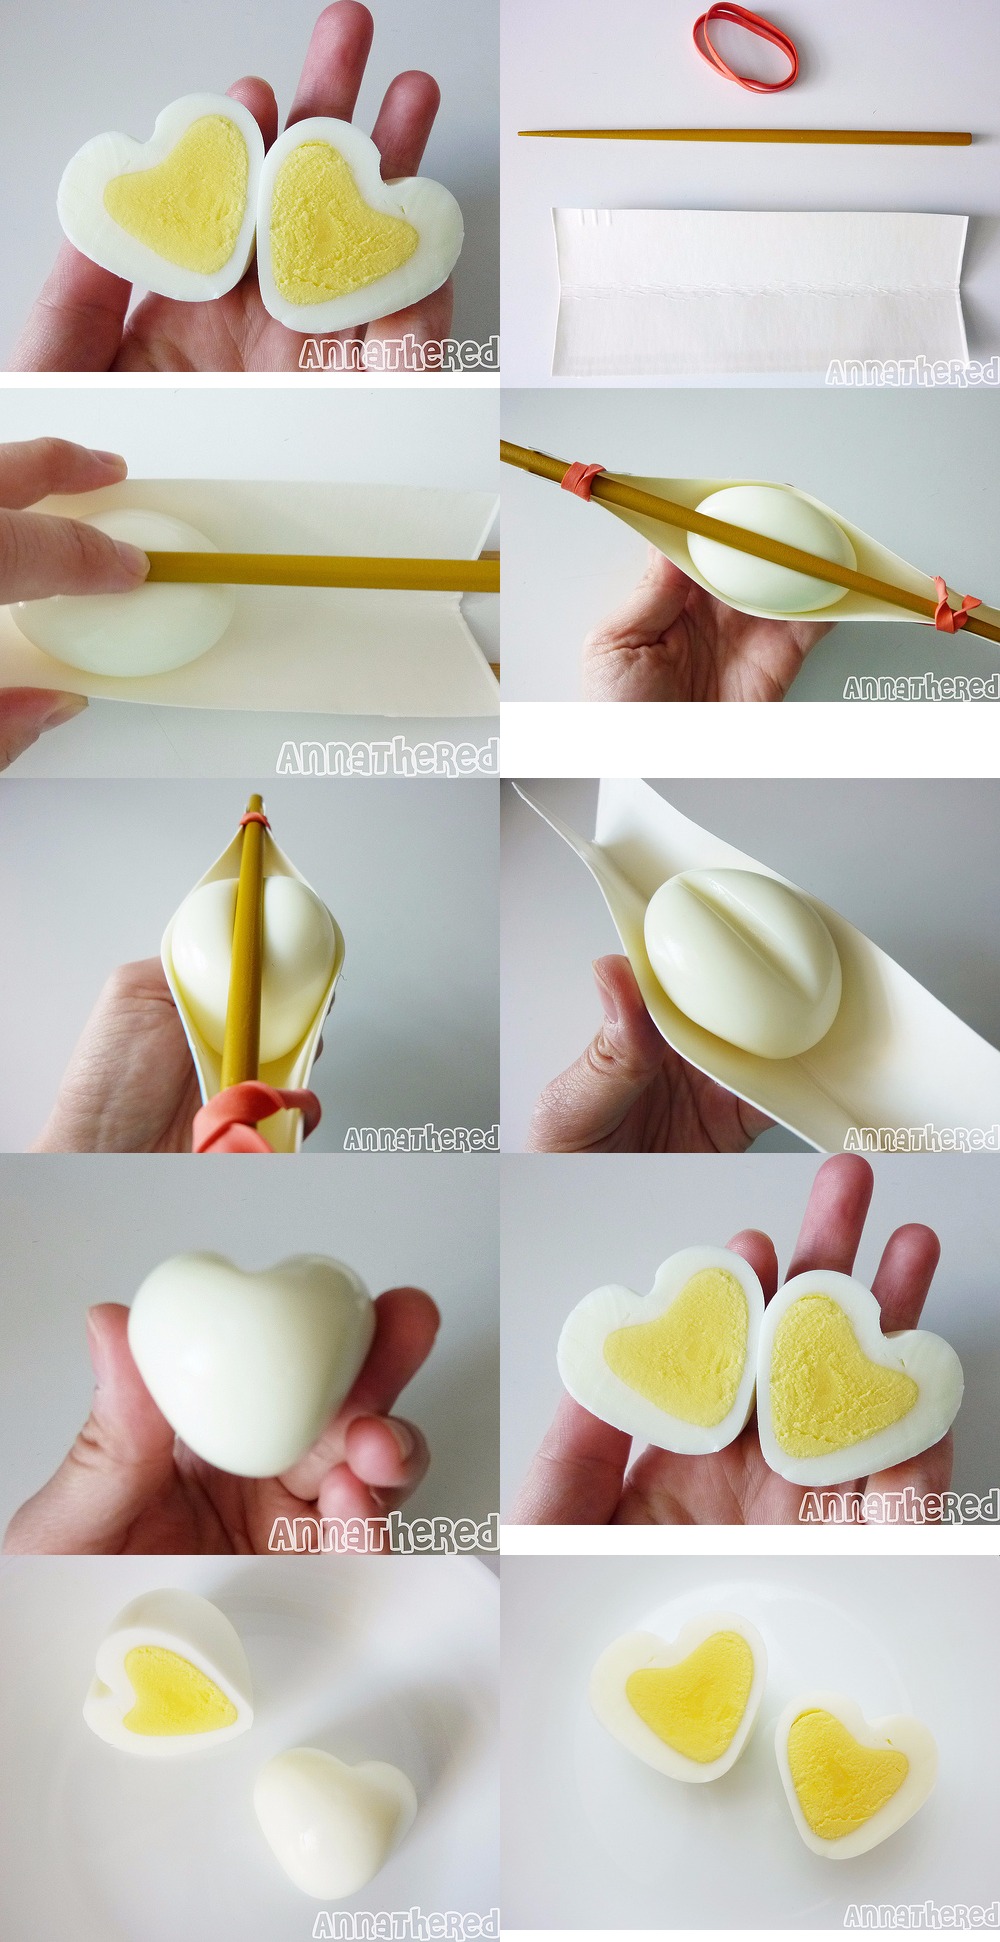 5-how-to-make-a-heart-shaped-egg